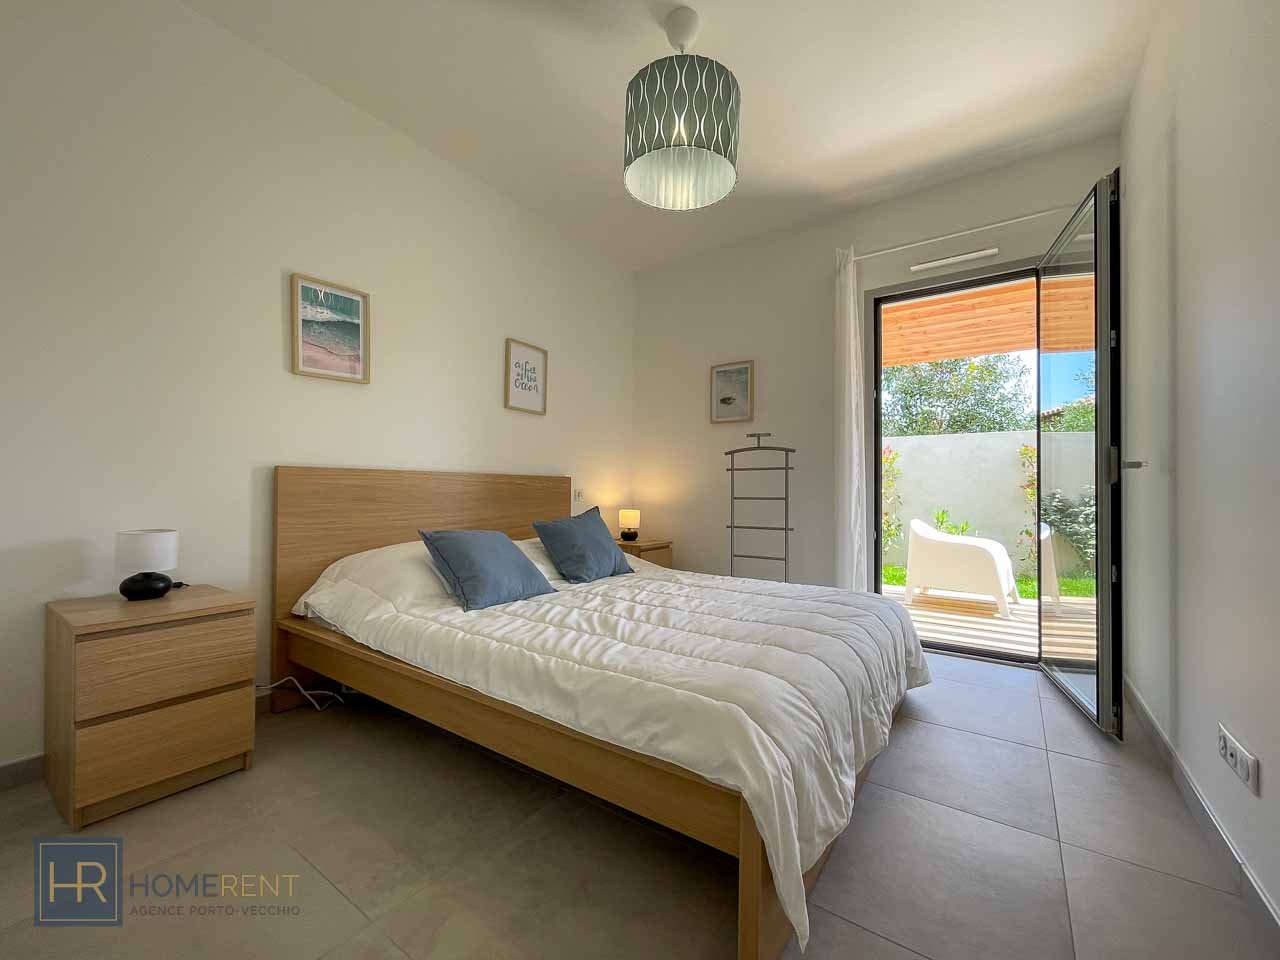 Chambre lits simples location appartement corse luxe Porto Vecchio Cala Rossa Lecci plage Cala Rossa à pied St Cyprien Pinarello piscine chauffée résidence calme